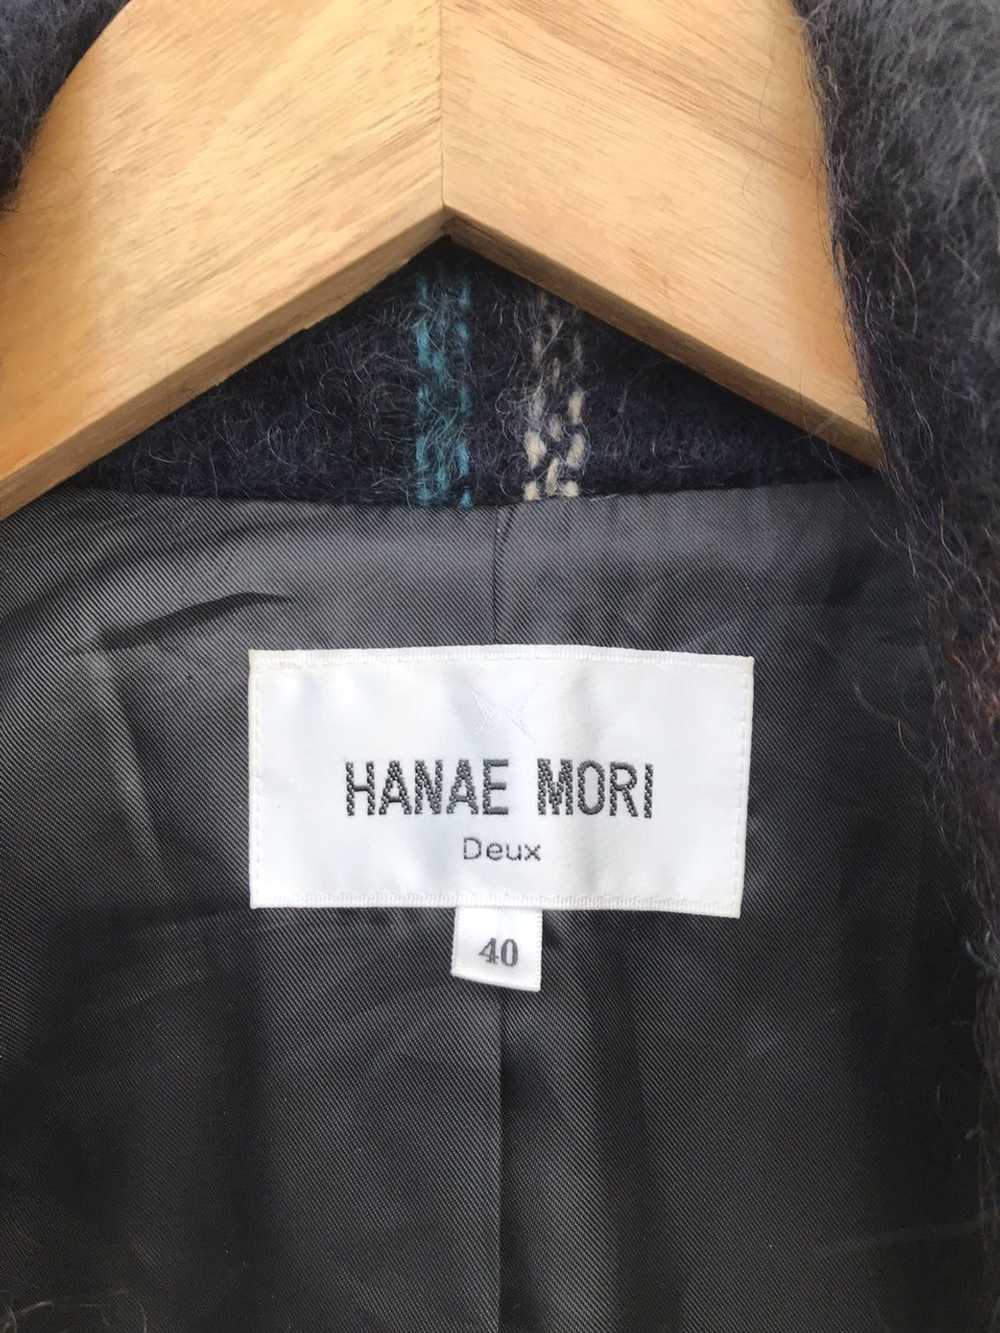 Hanae Mori Hanae Mori Deux mohair tap button coat - image 9